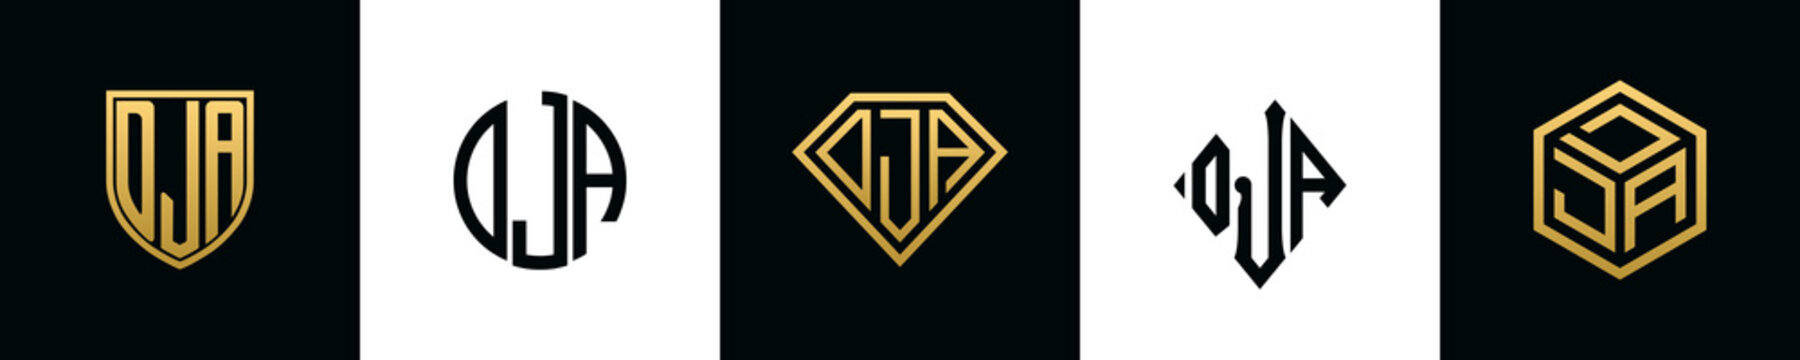 Initial letters DJA logo designs Bundle